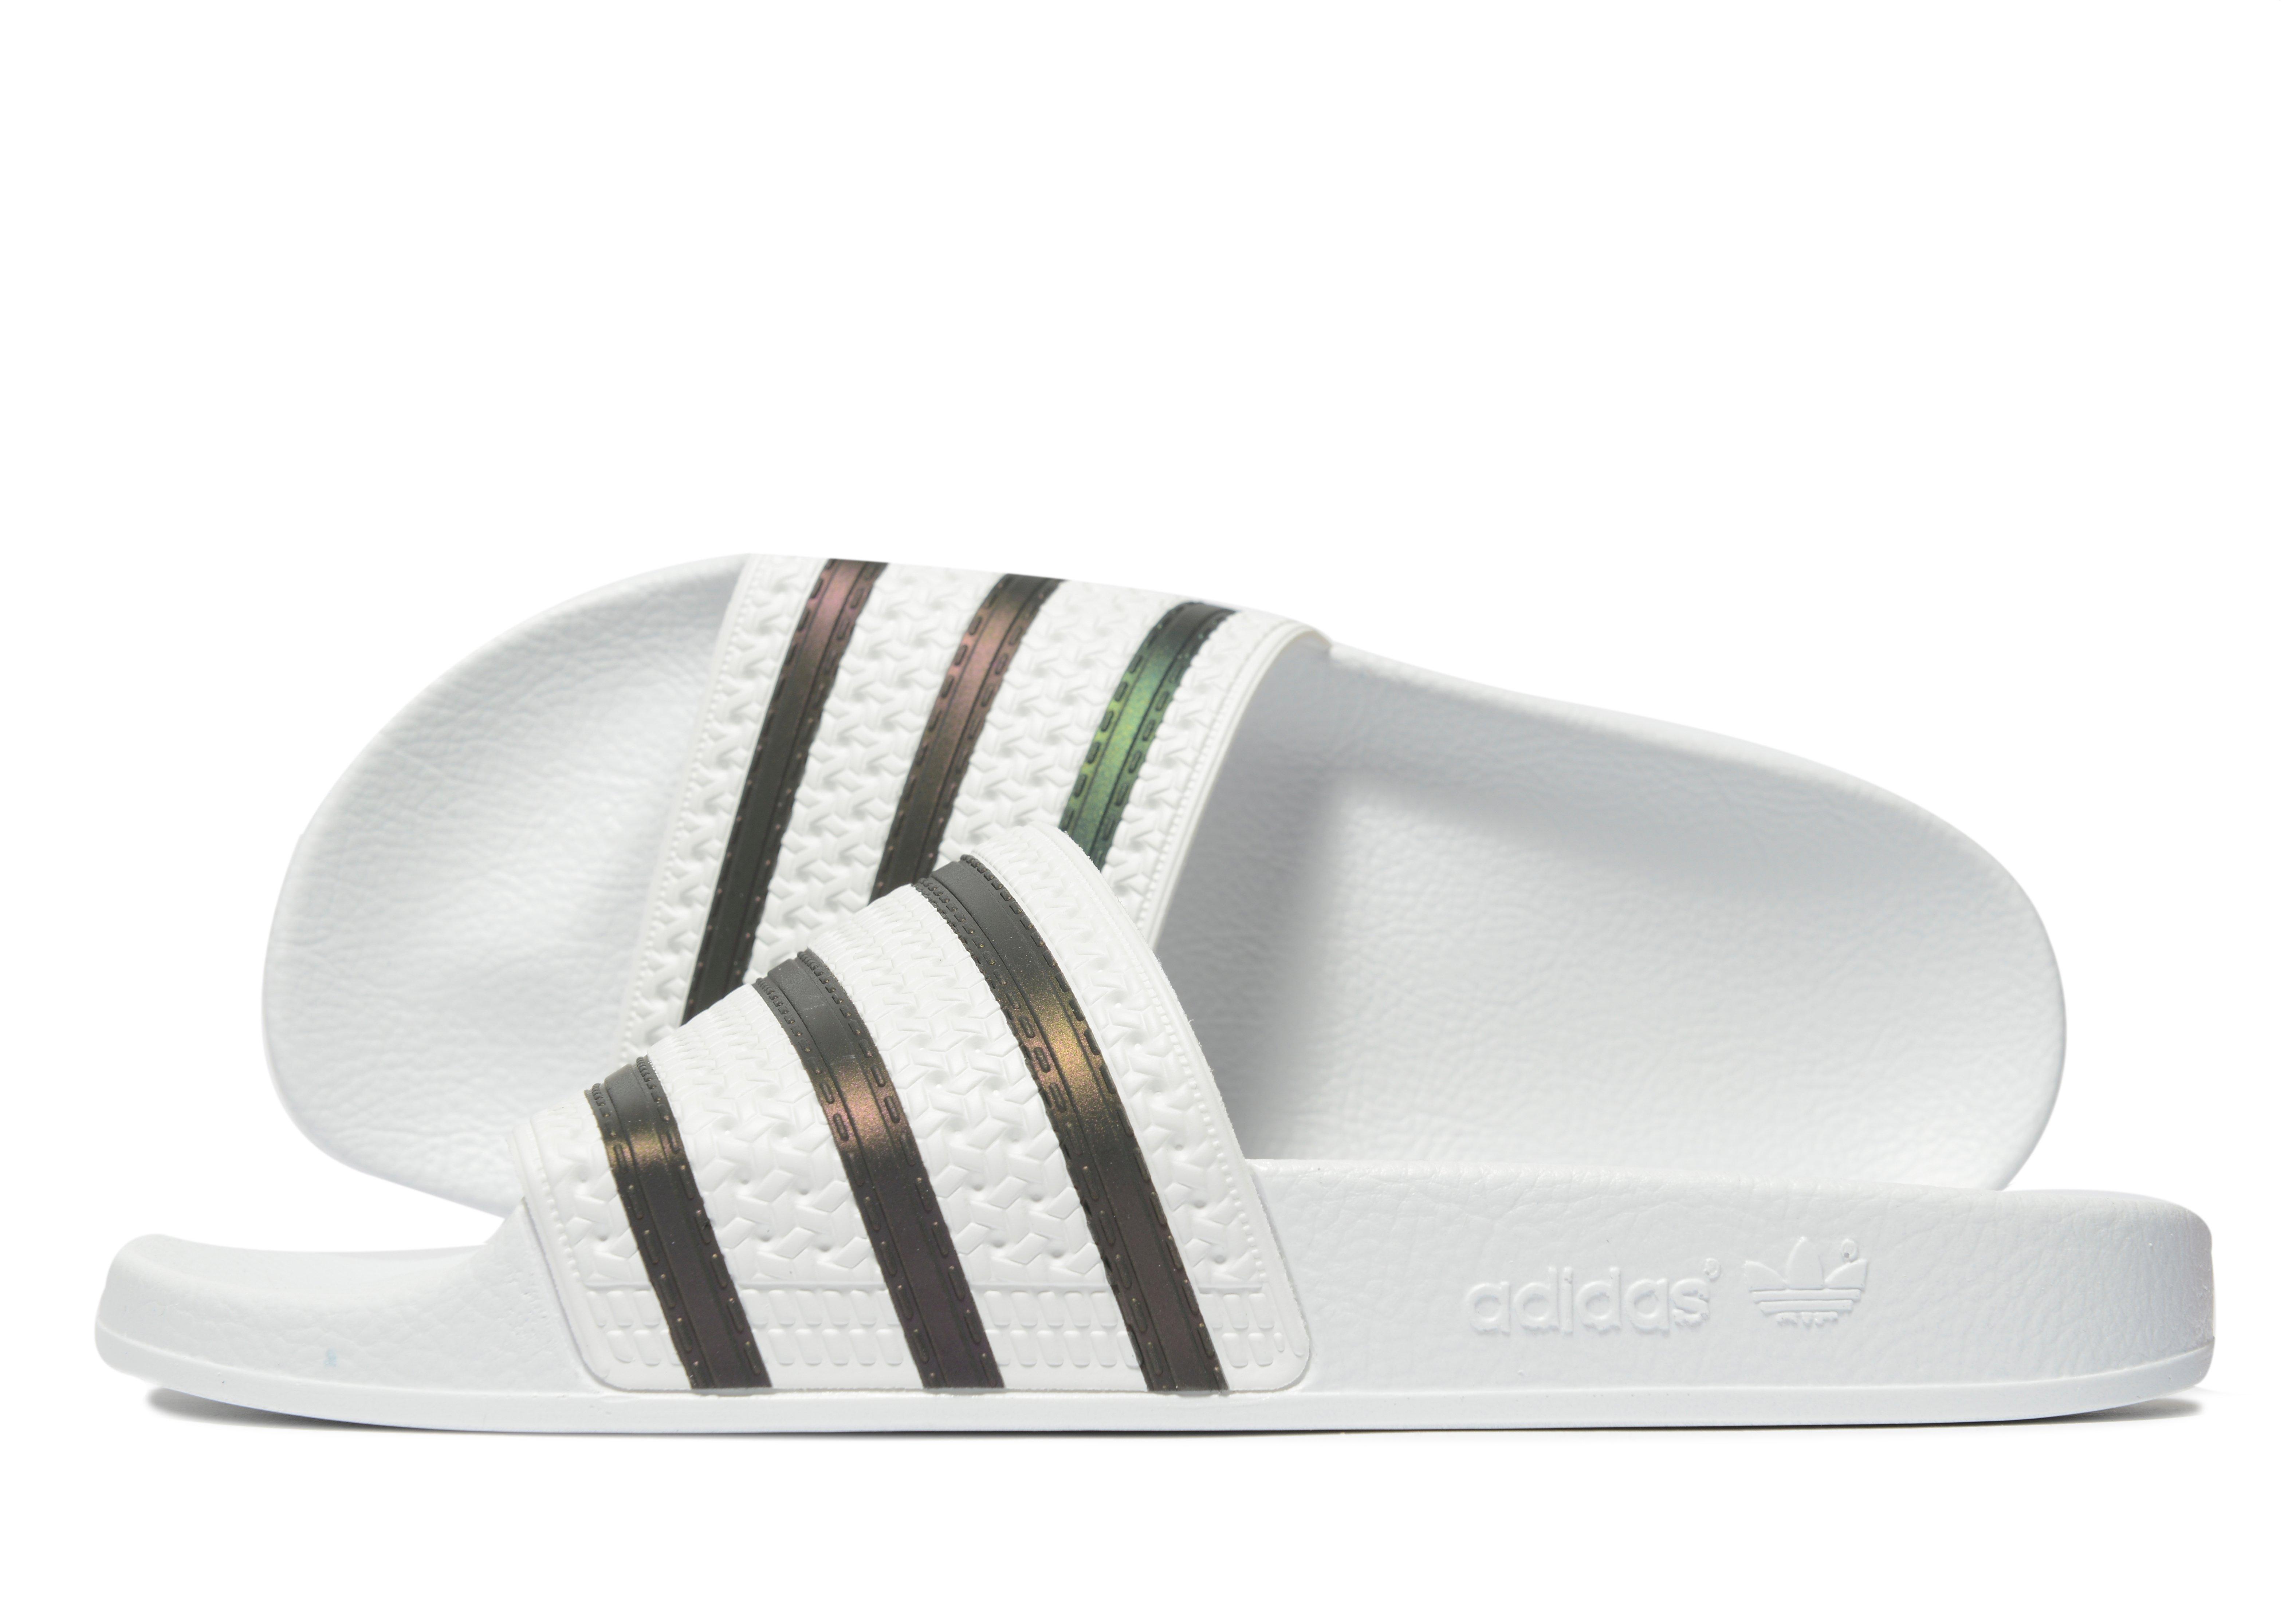 Slides Adidas / Adidas Originals Adilette Slide Sandals Free Shipping / Slip on and slide